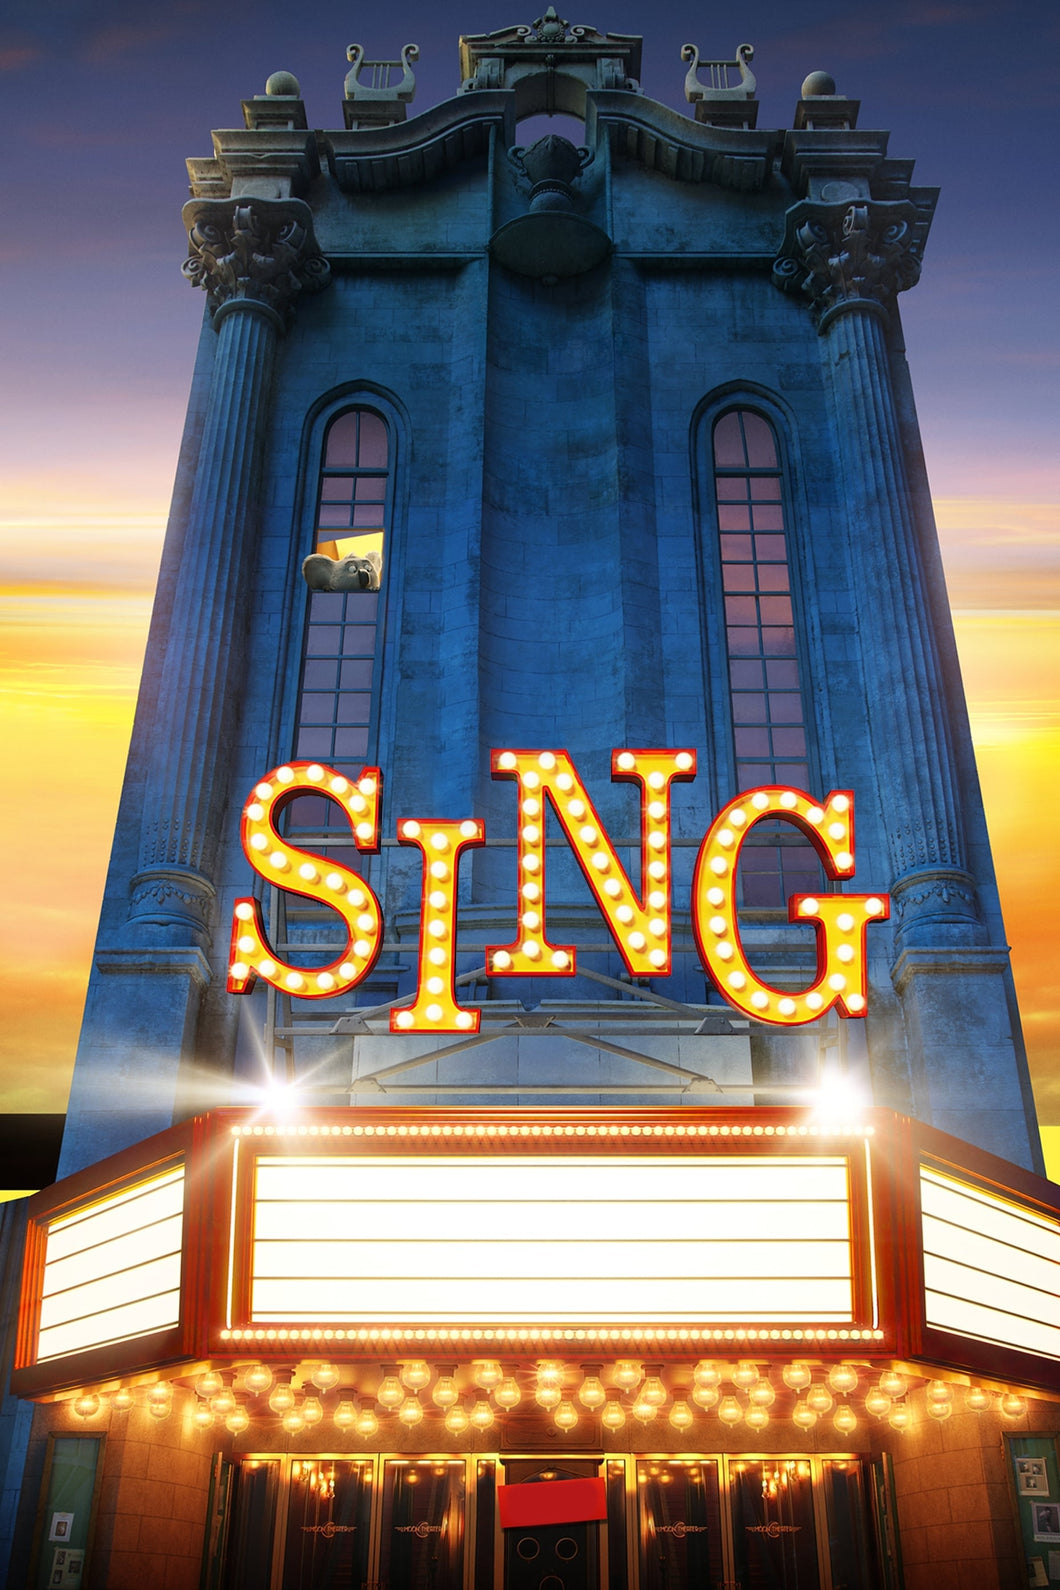 Sing (2016) V2 Animated Movie Poster Framed or Unframed Glossy Poster Free UK Shipping!!!